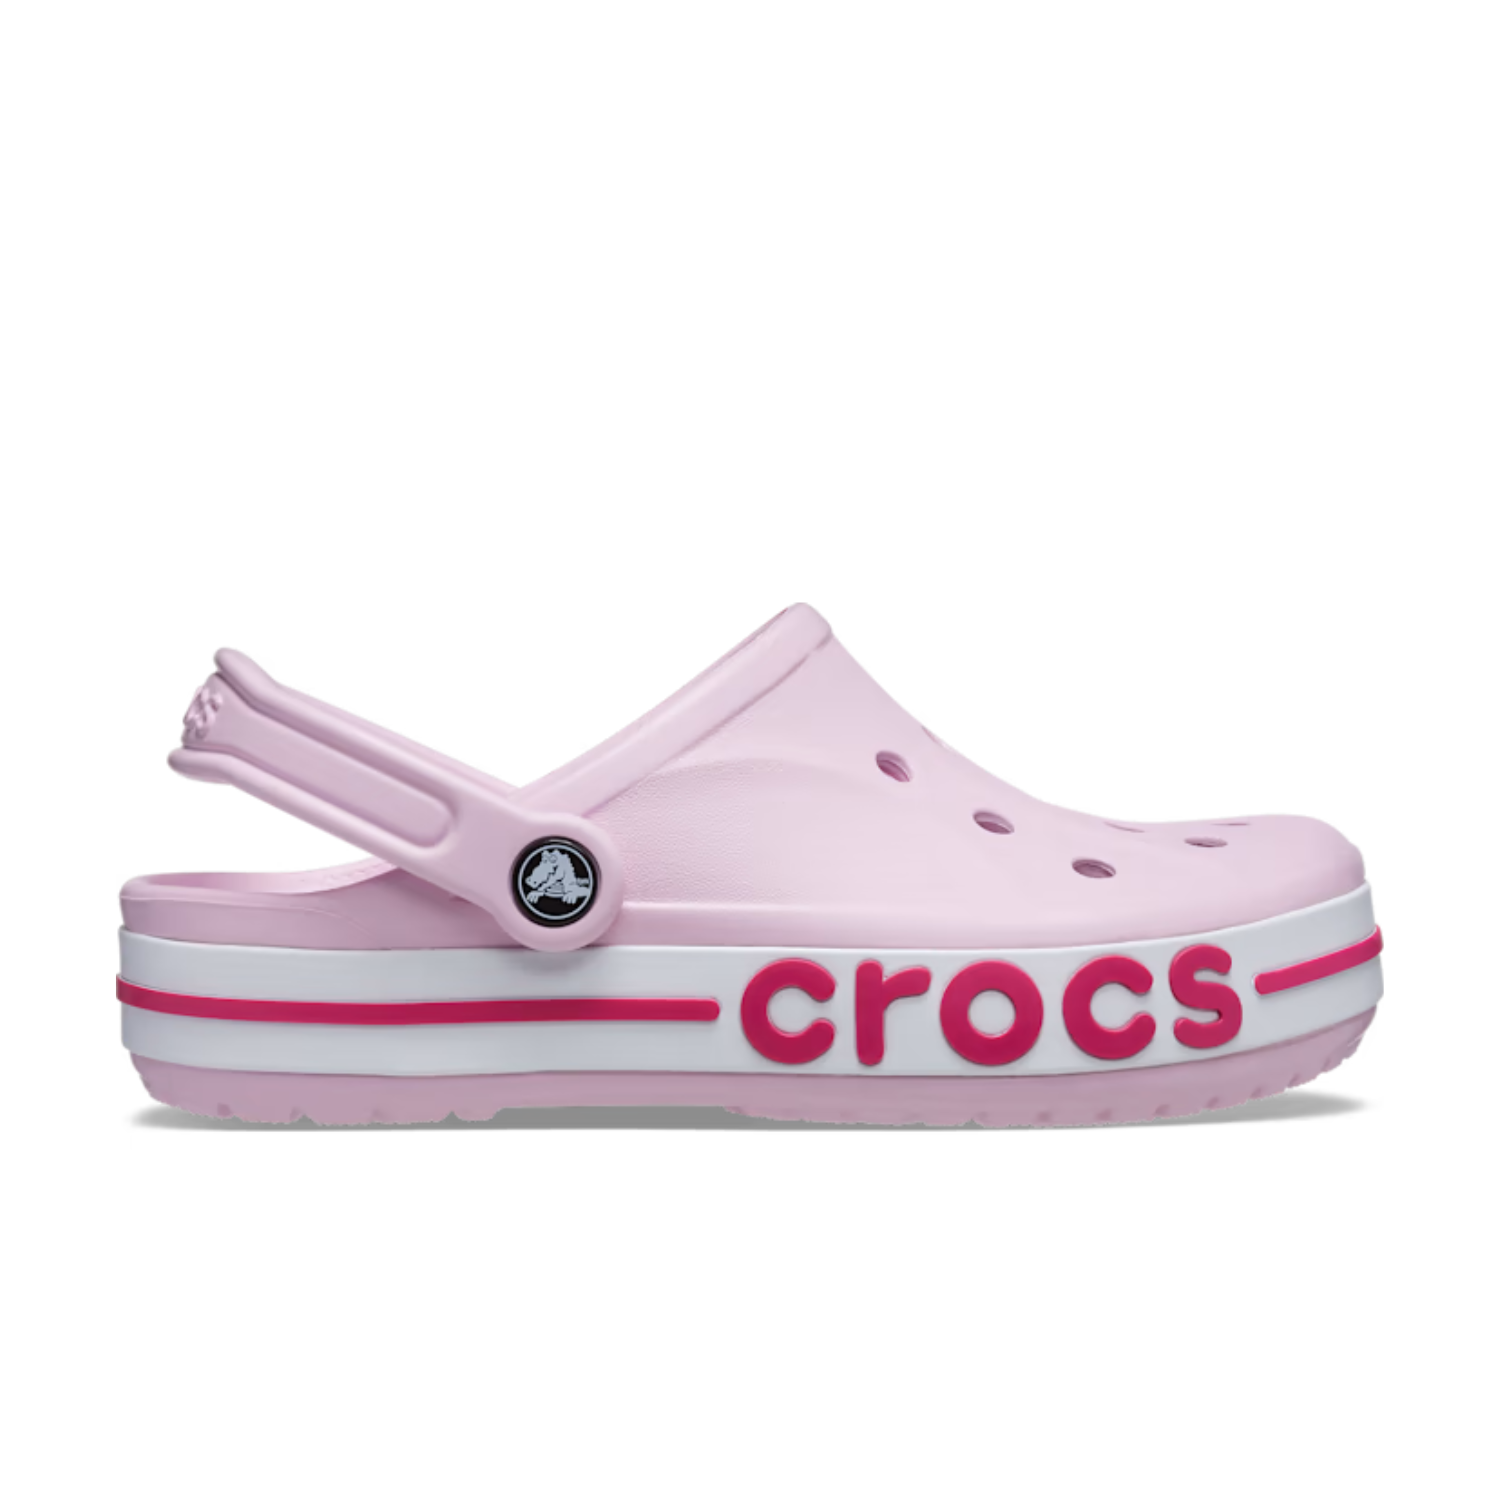 Crocs clog pink